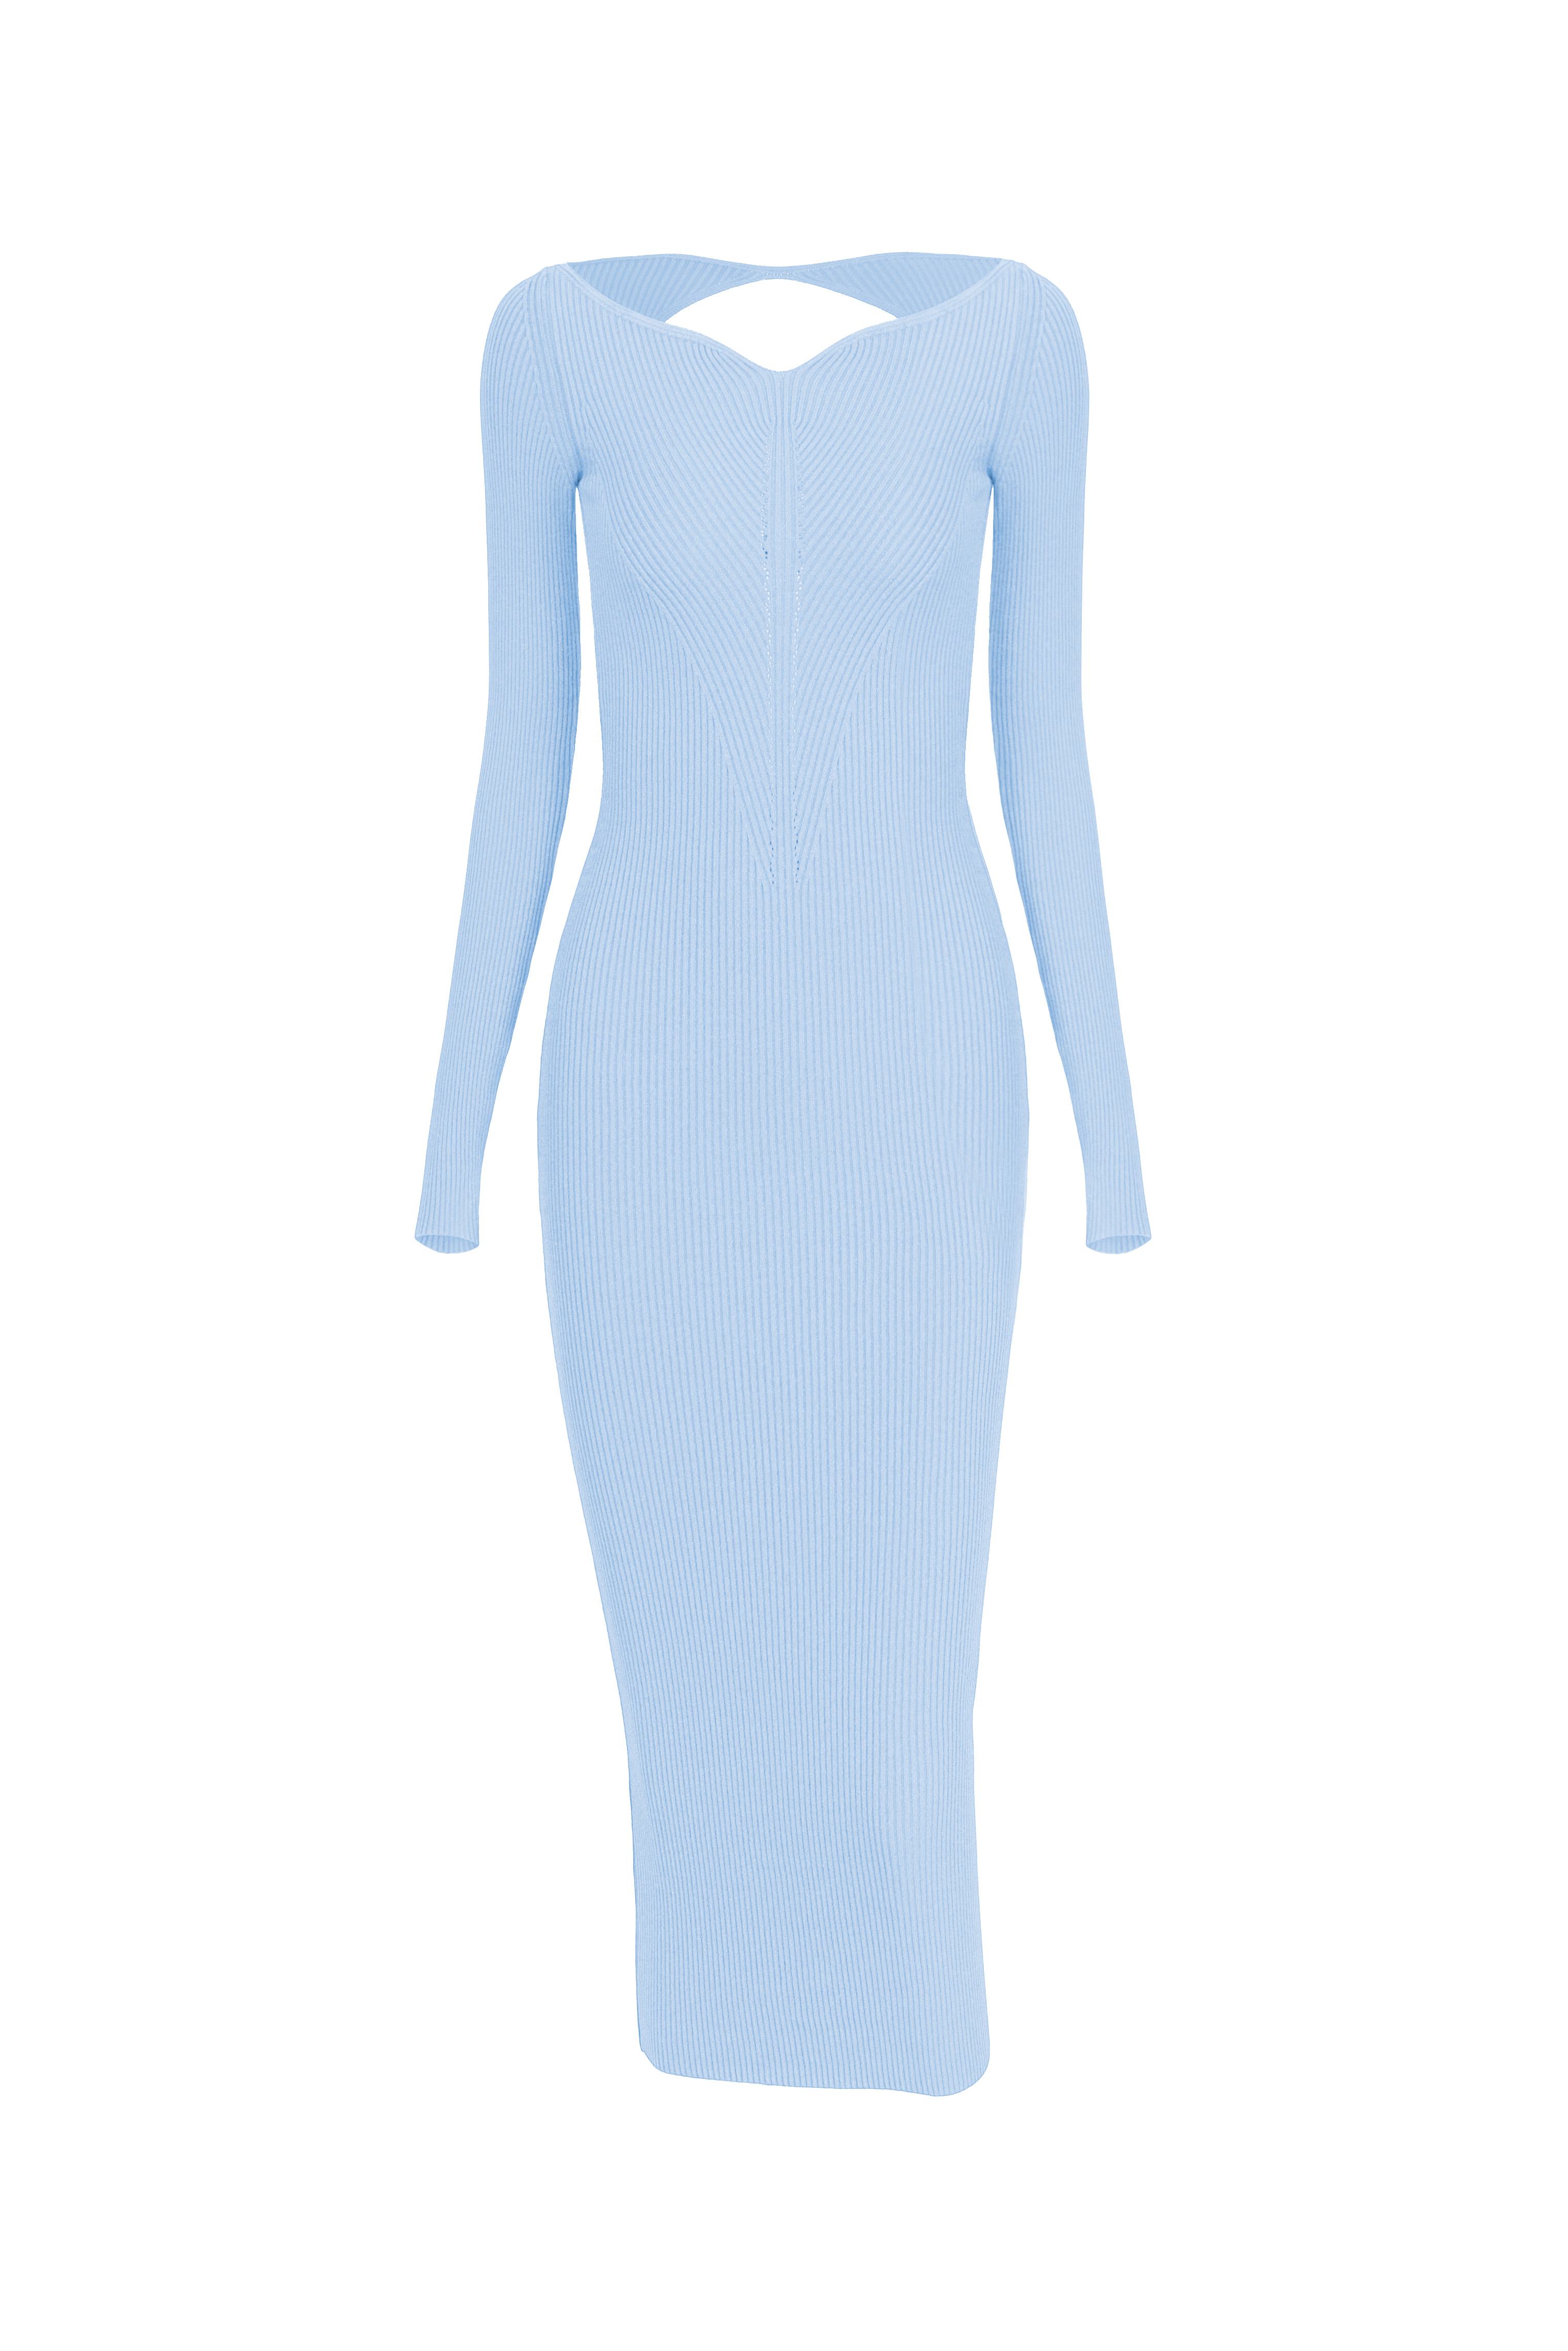 Dress 3199-07 Blue from BRUSNiKA